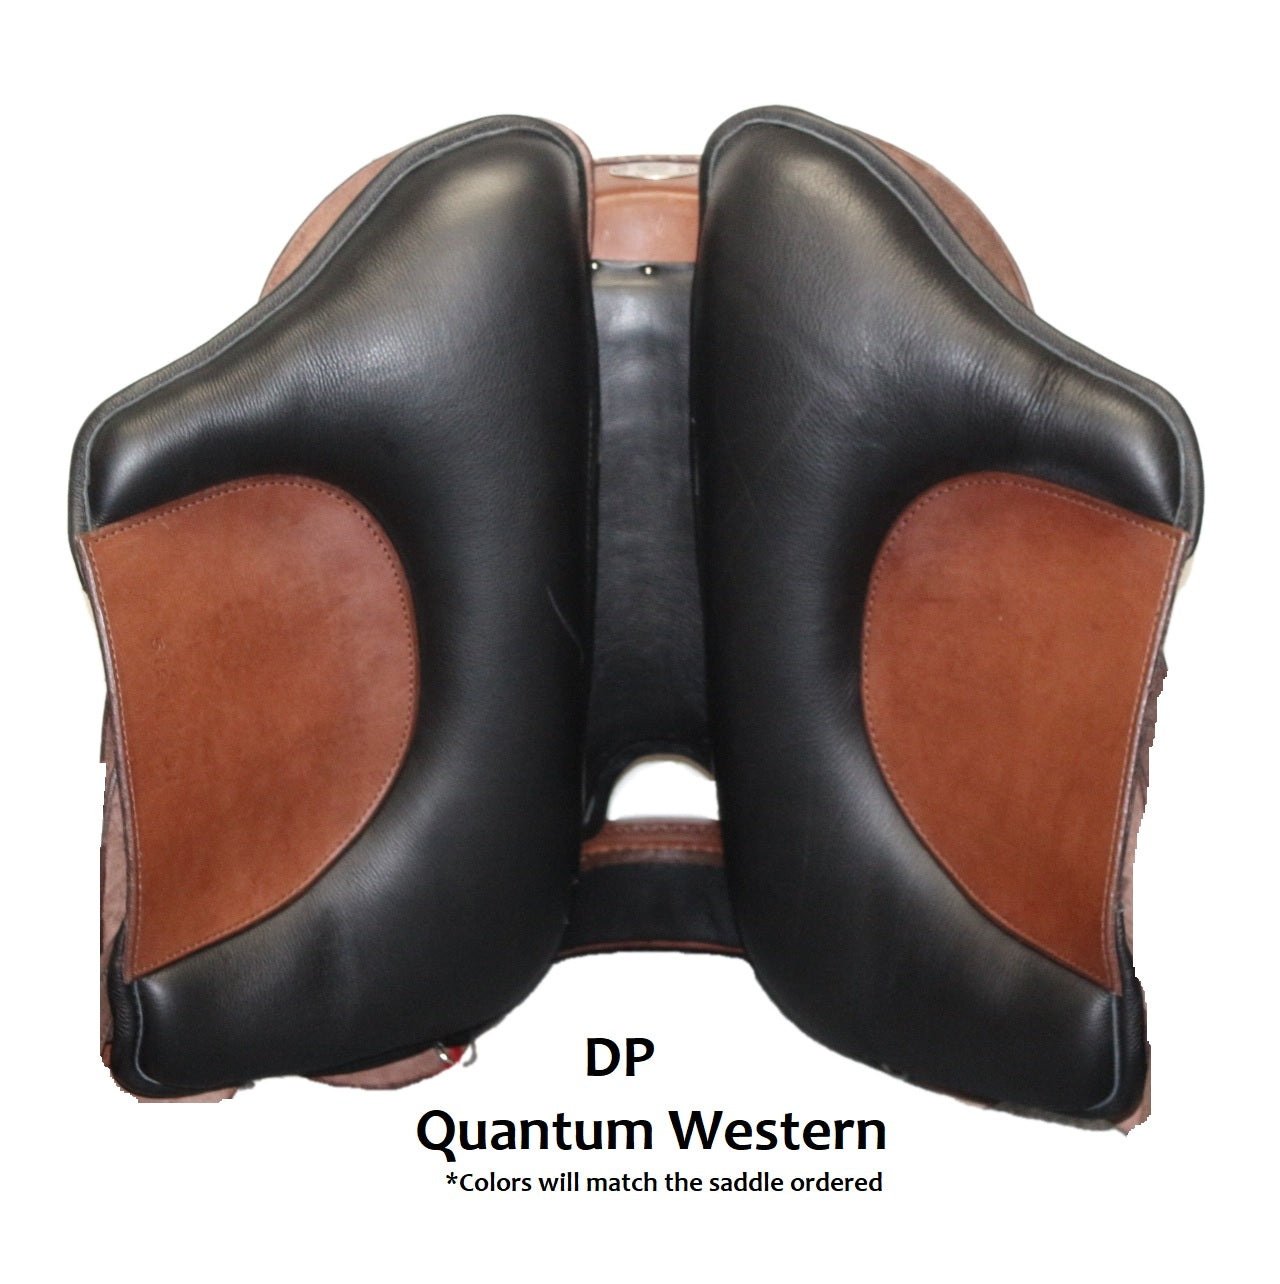 DP Saddlery Quantum Western 6903 S2